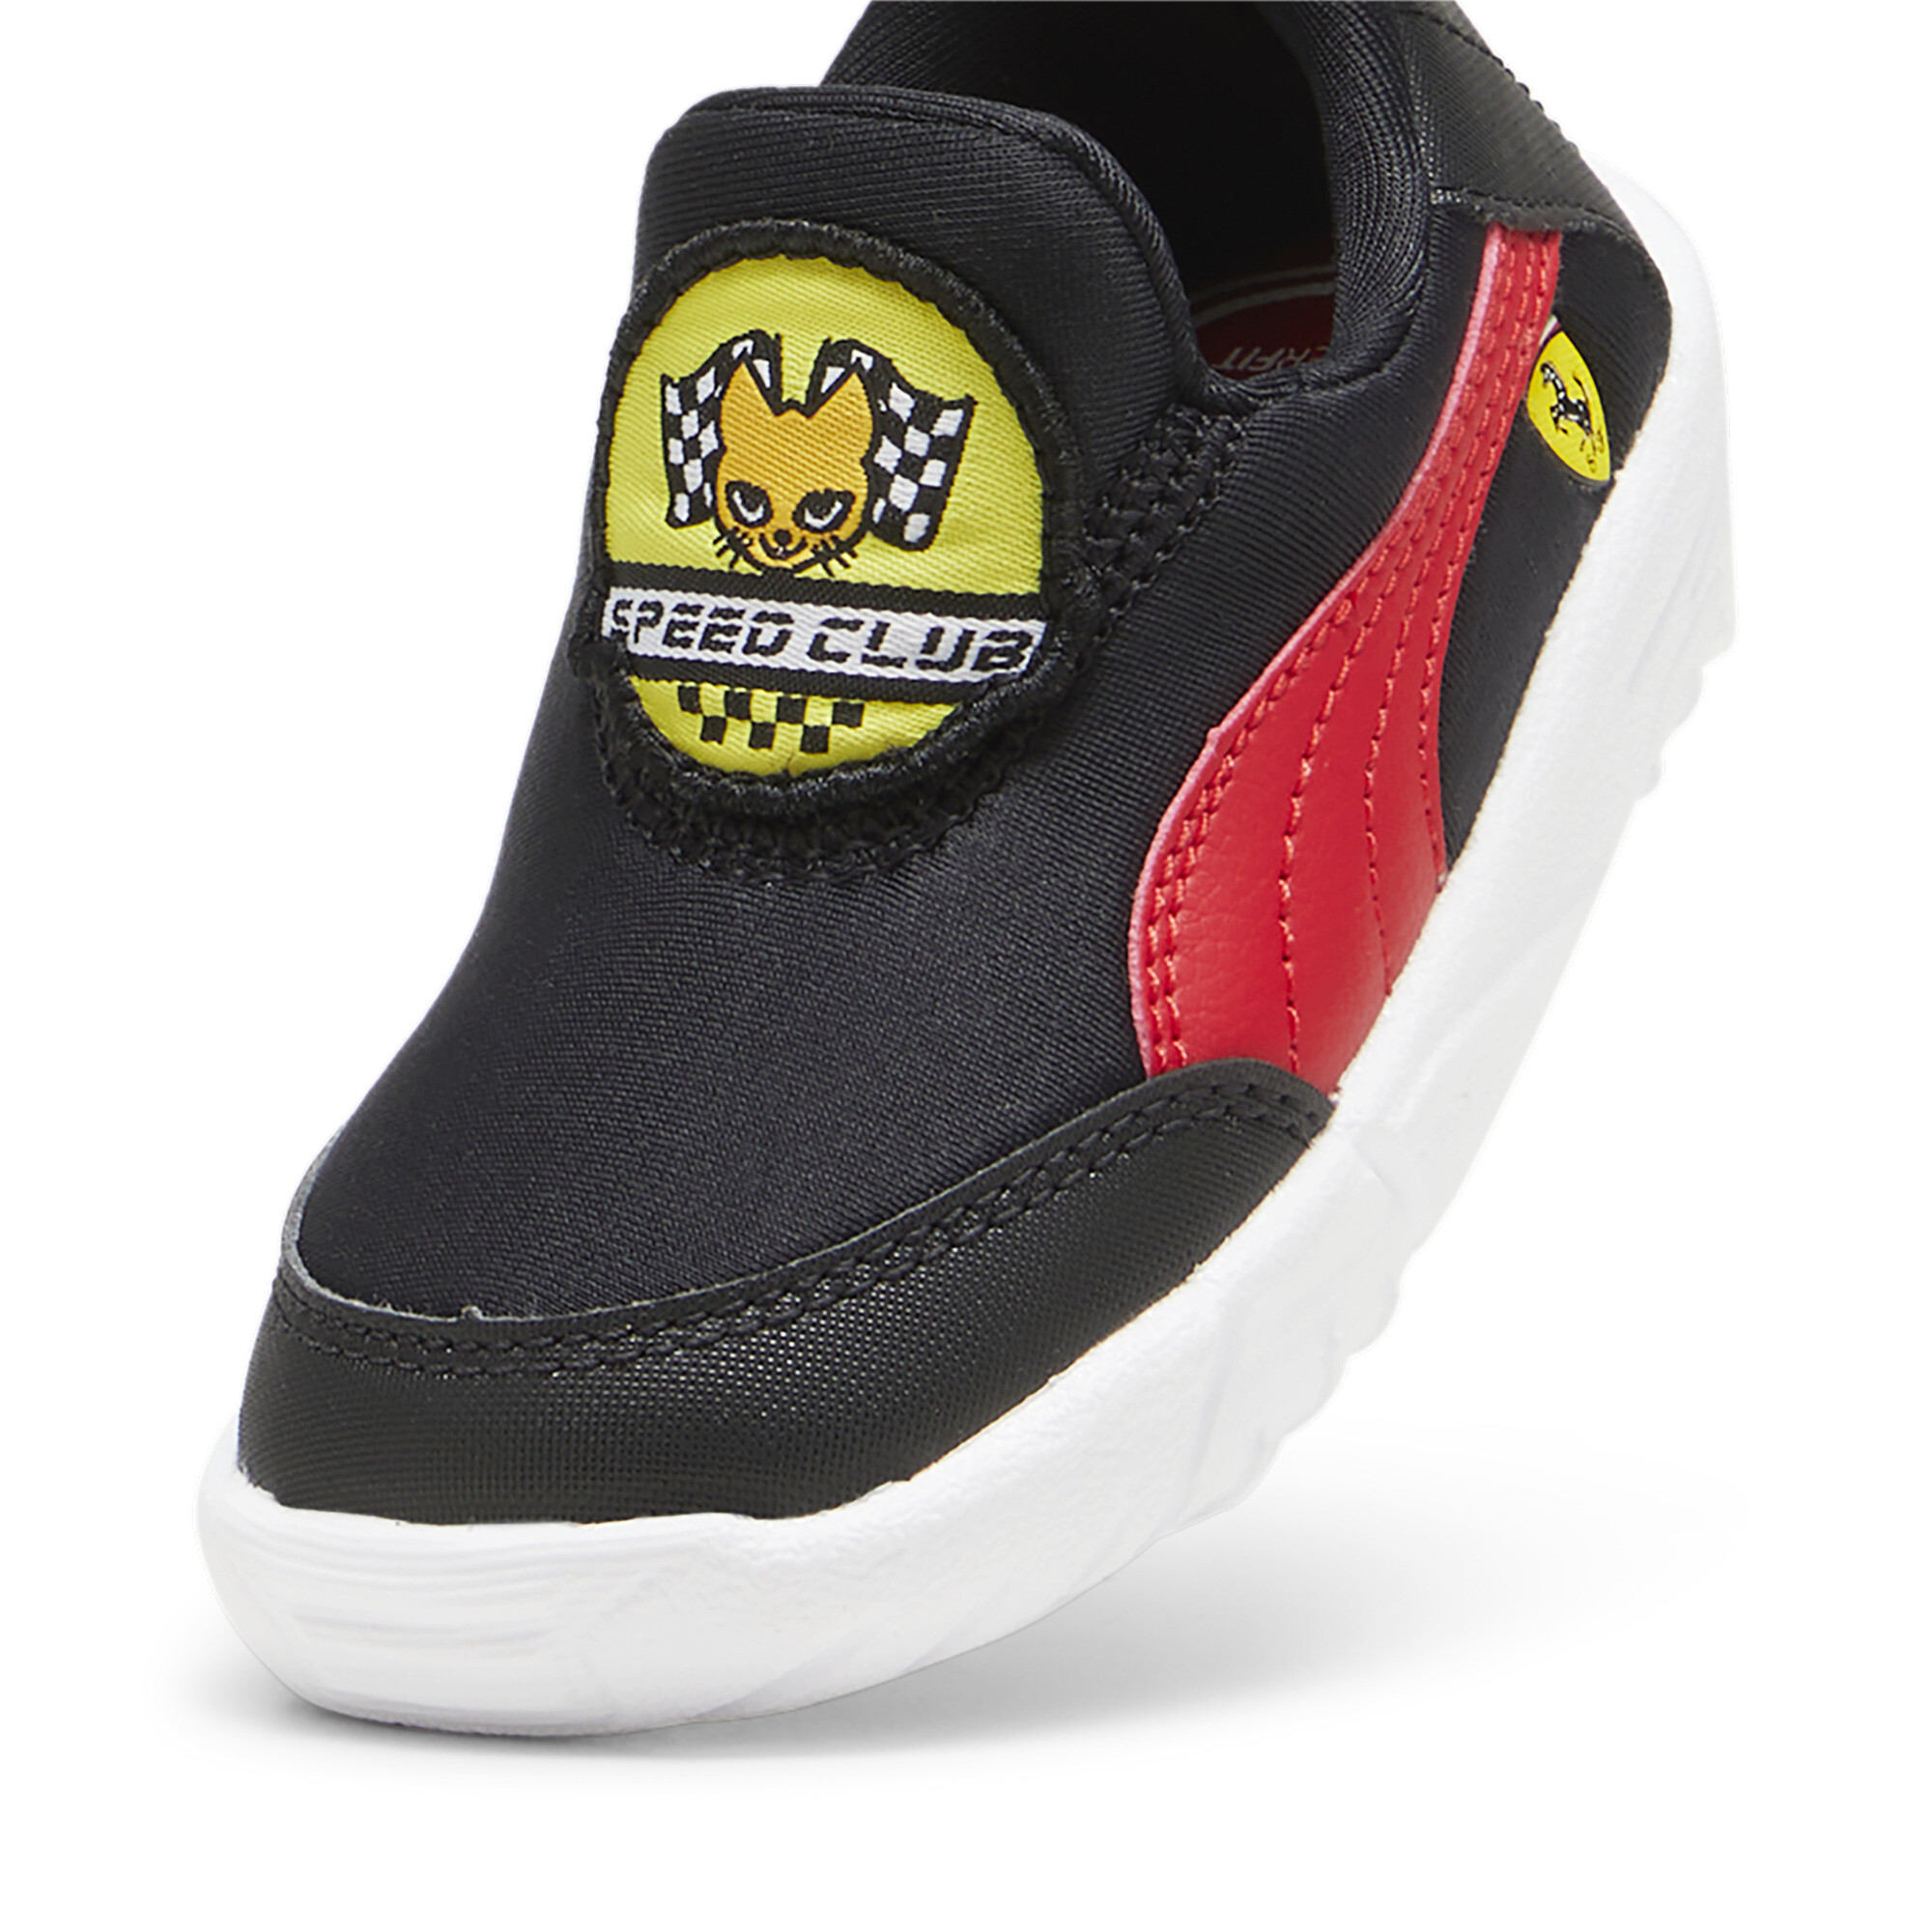 Puma Scuderia Ferrari Bao Kart Toddlers' Motorsport Shoes, Black, Size 27, Shoes